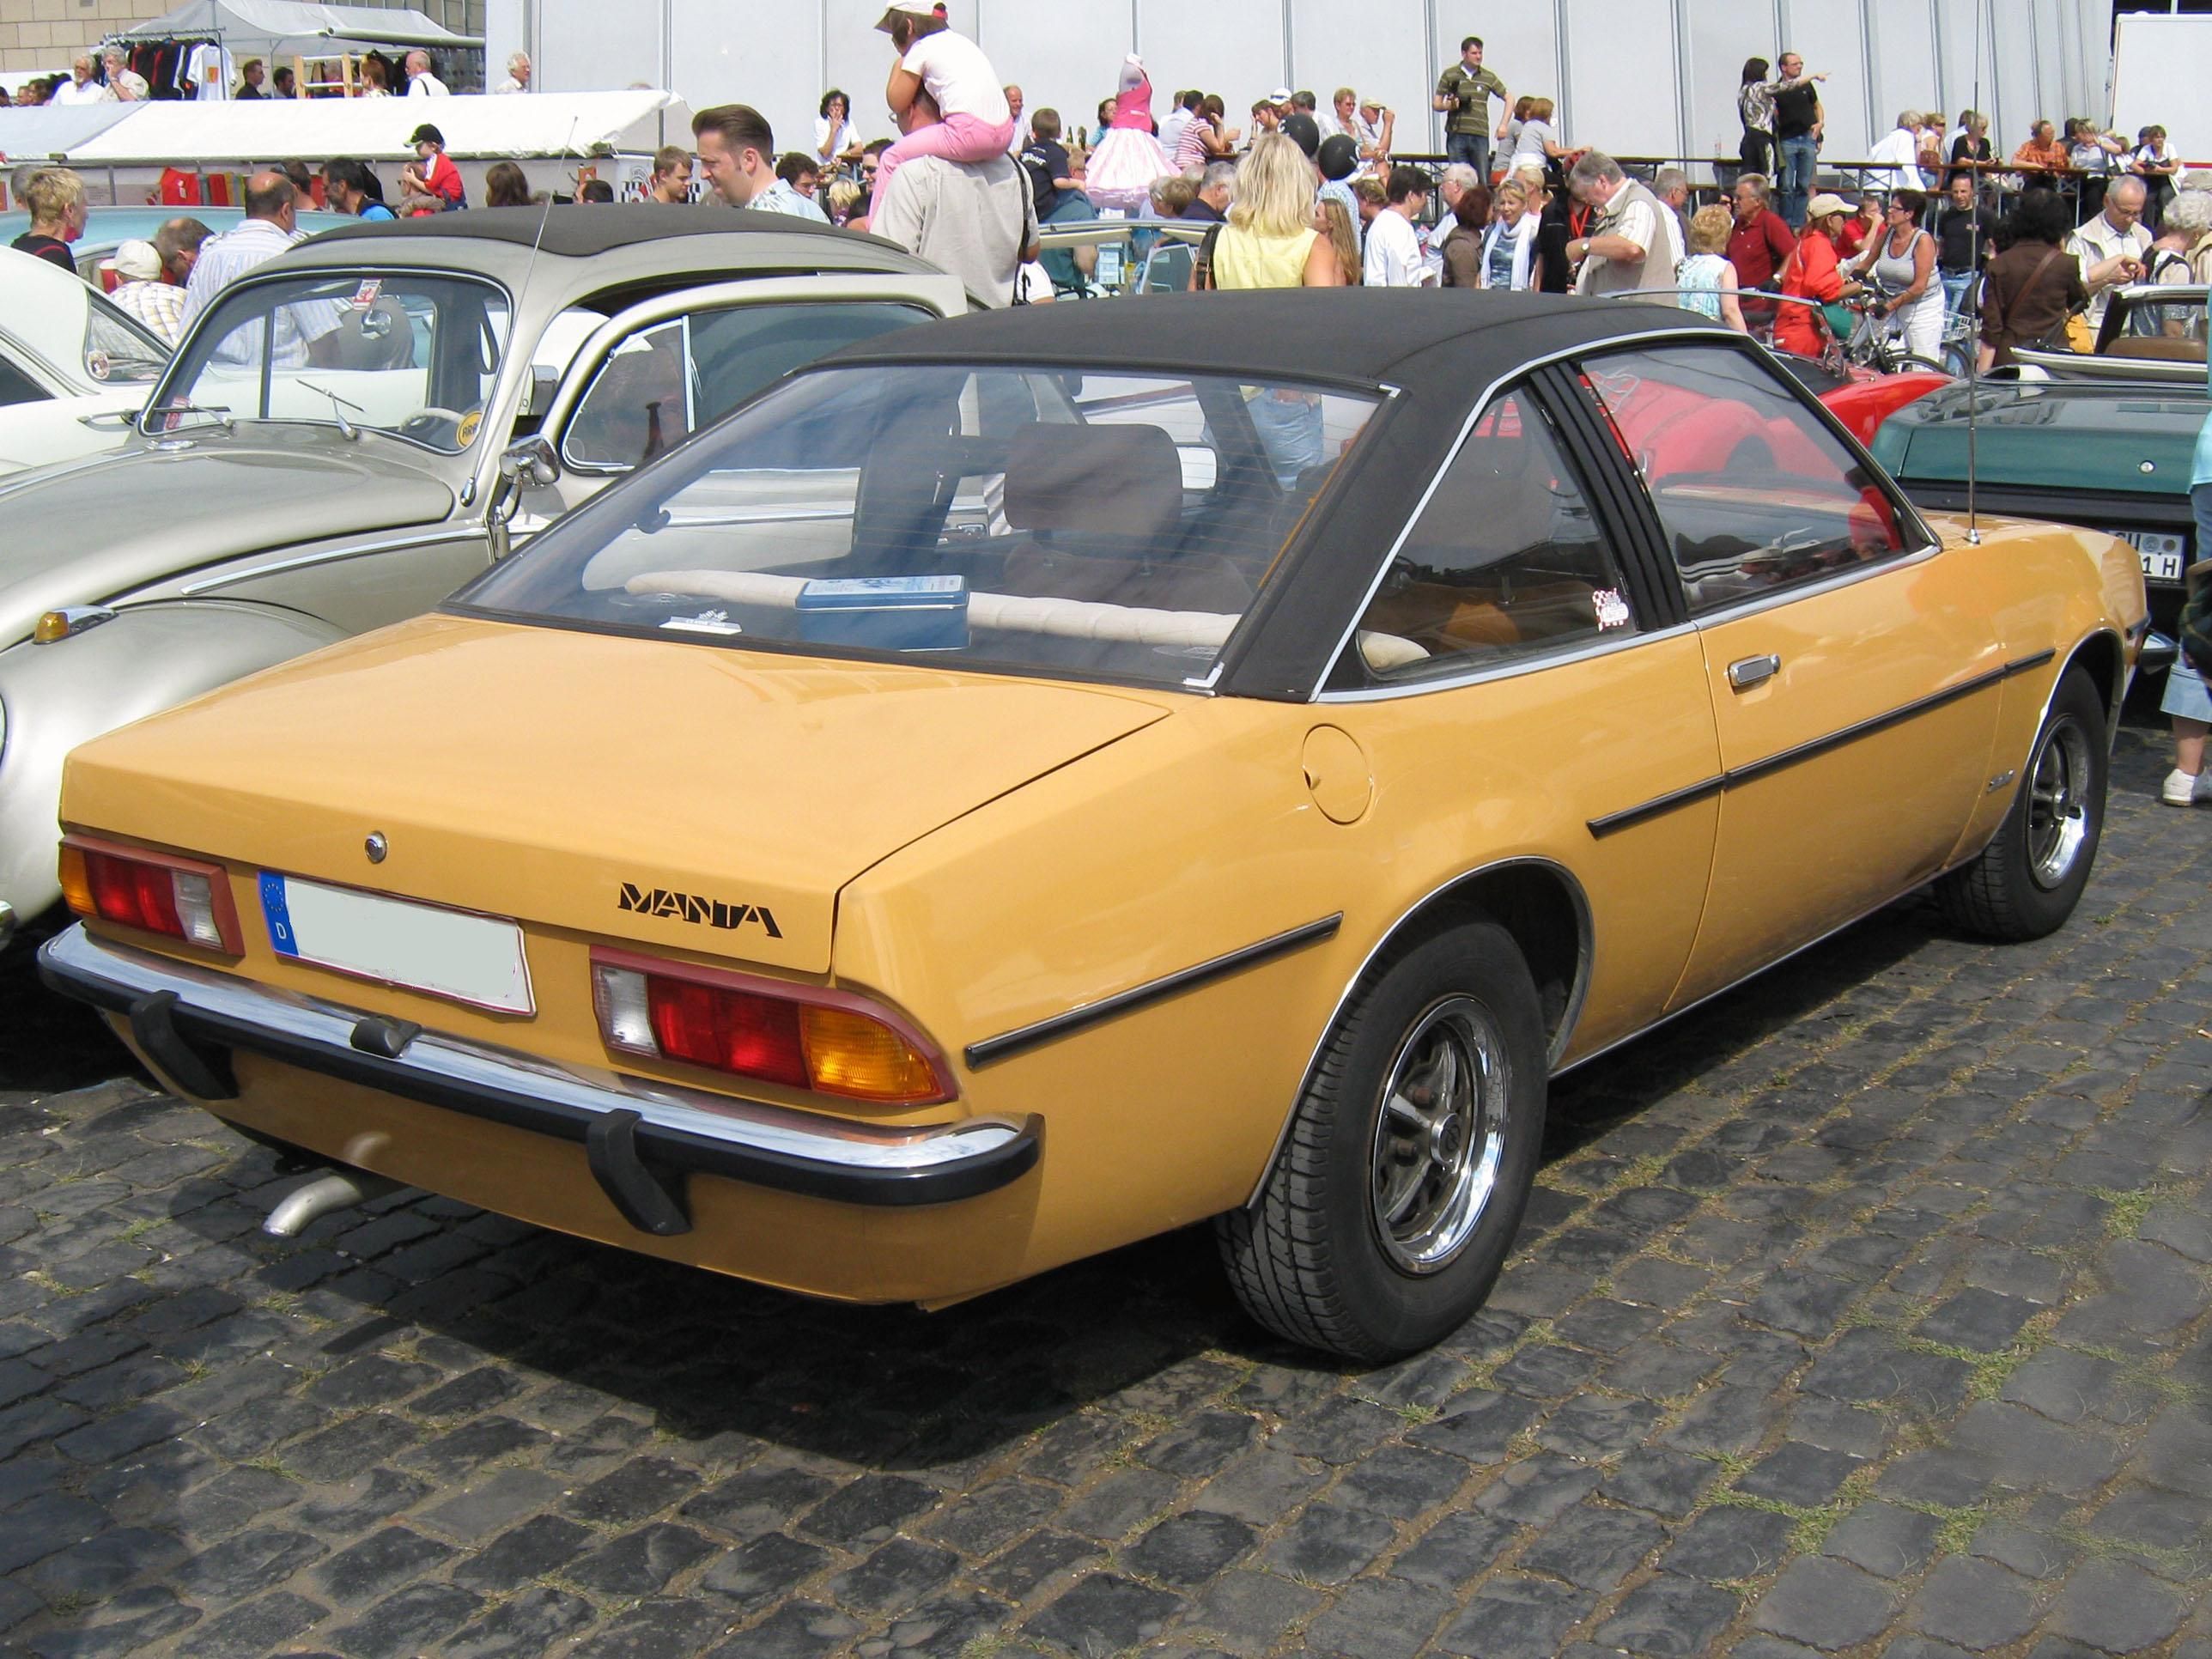 1975 Opel Manta B rear view